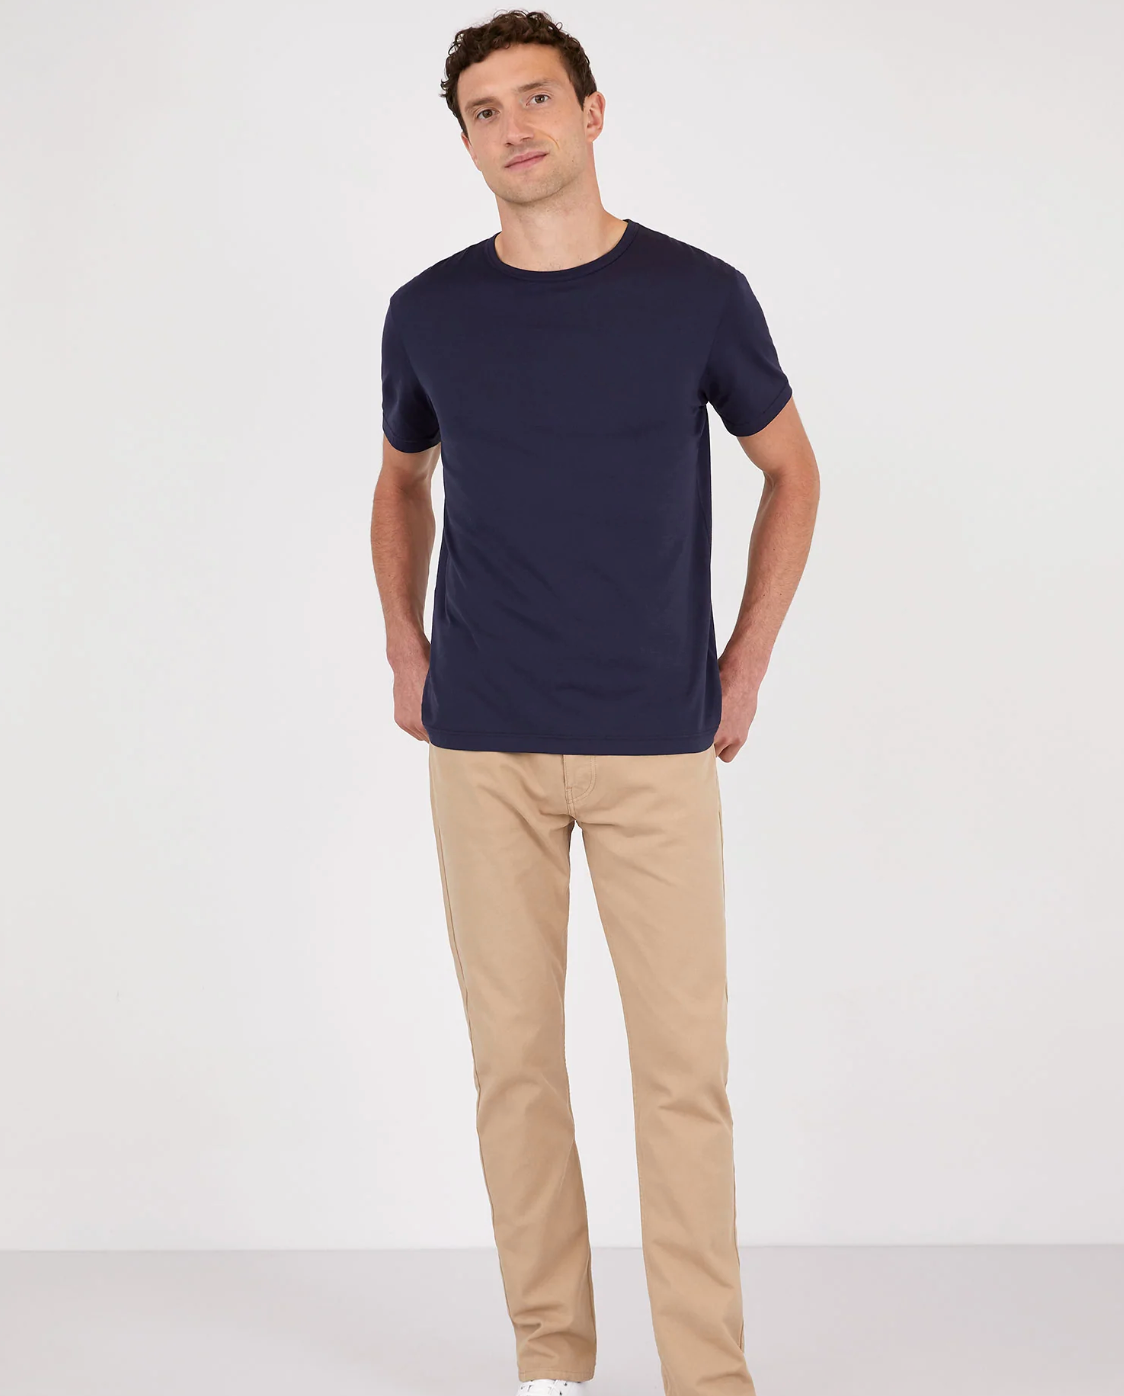 Navy Classic Cotton T-Shirt